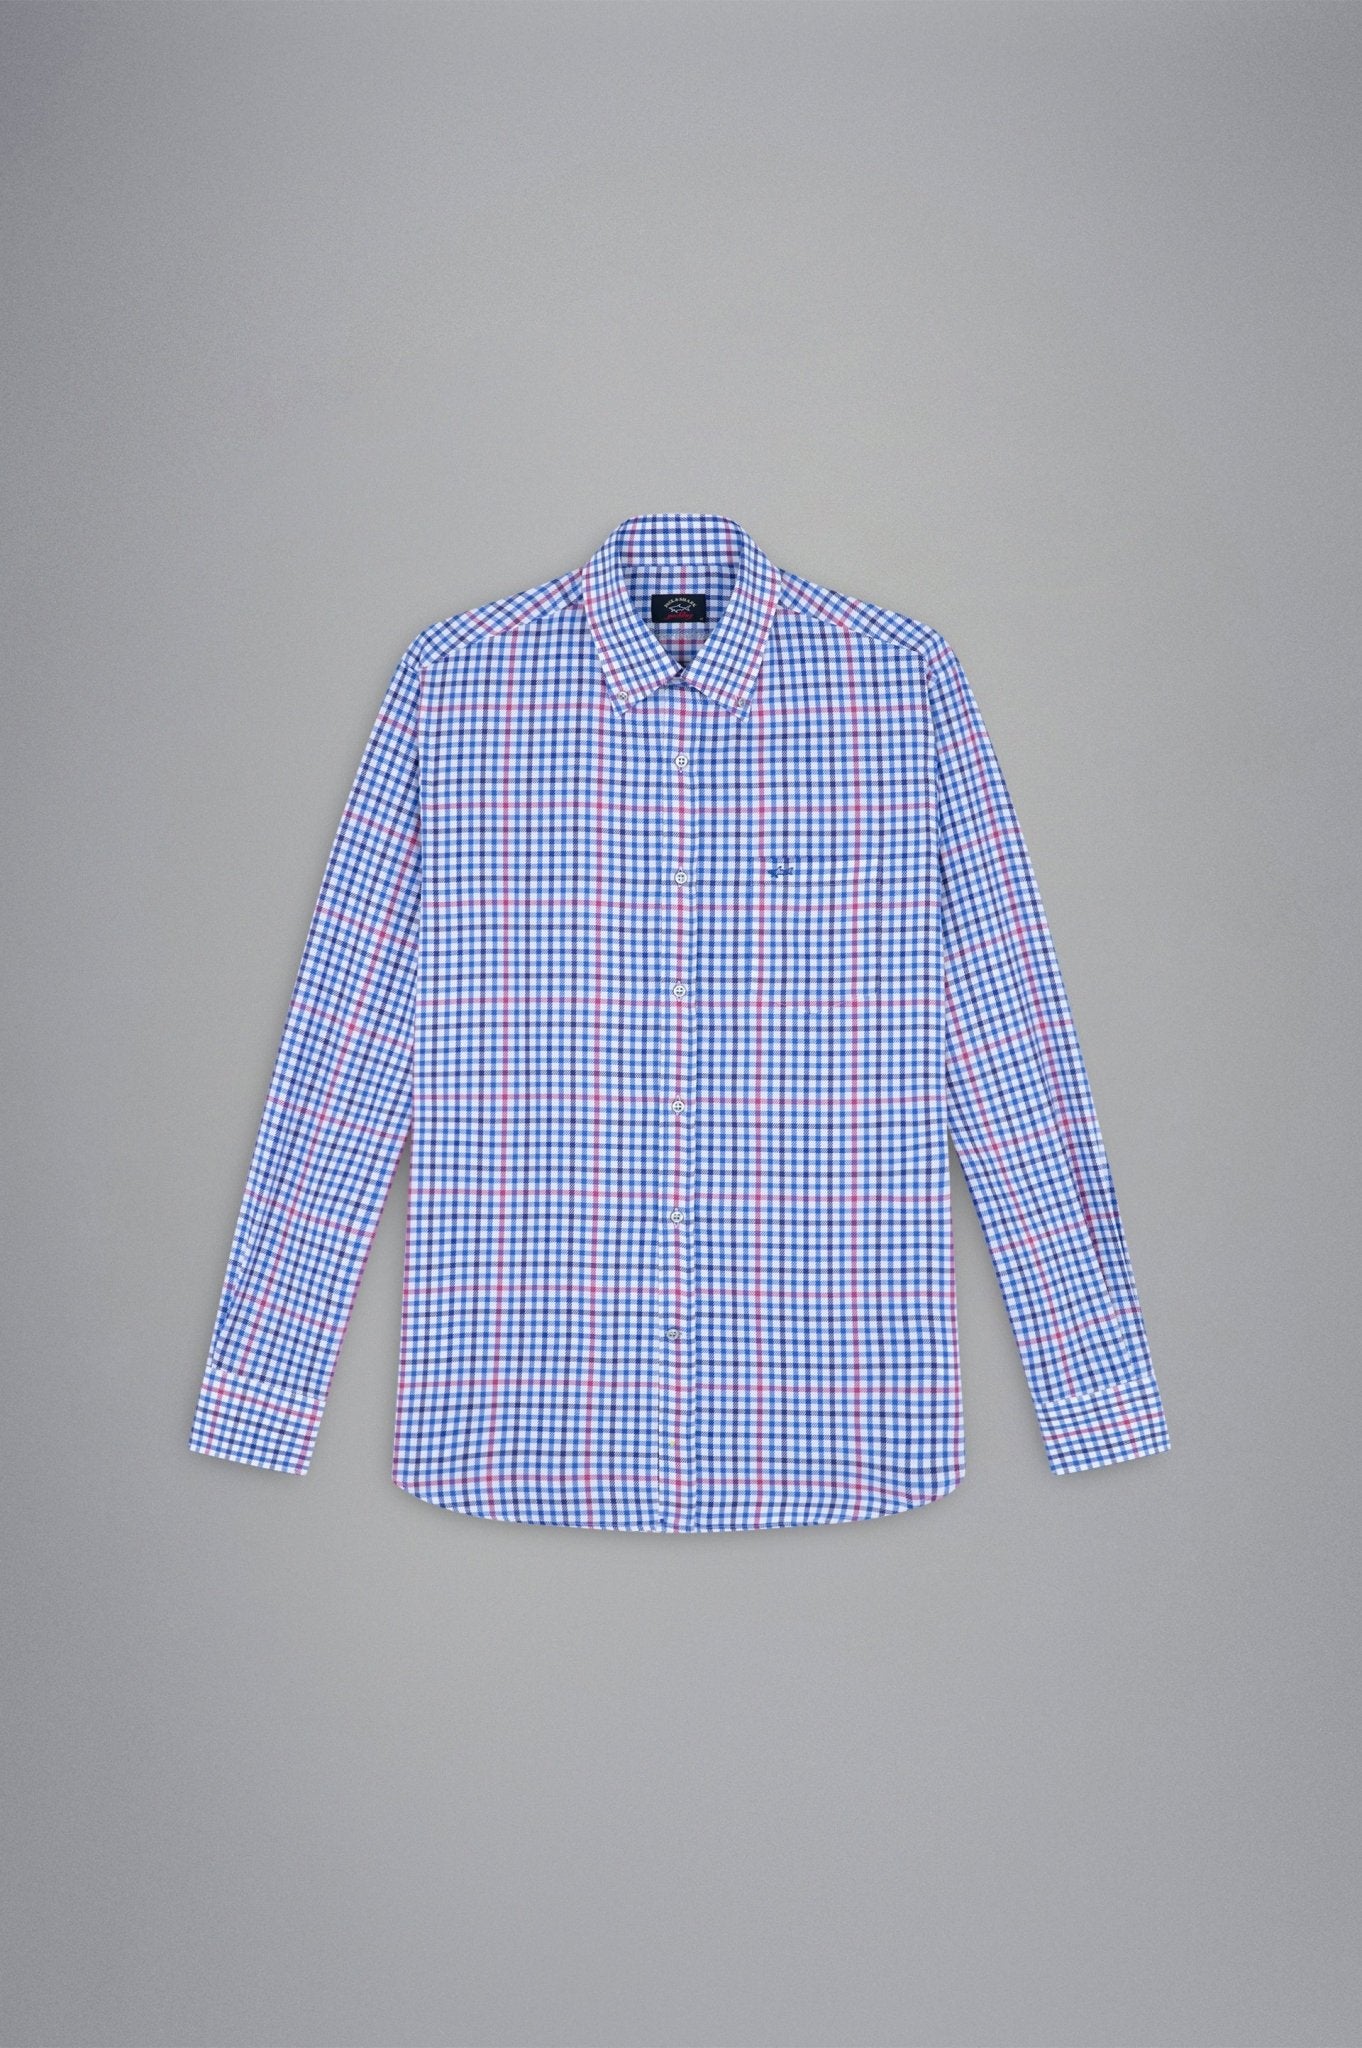 PAUL&SHARK X Long Sleeve Twill Check Shirt RED/WHITE/BLUE - Henry BucksShirts38AW240041 - REDWHTBLU - 40